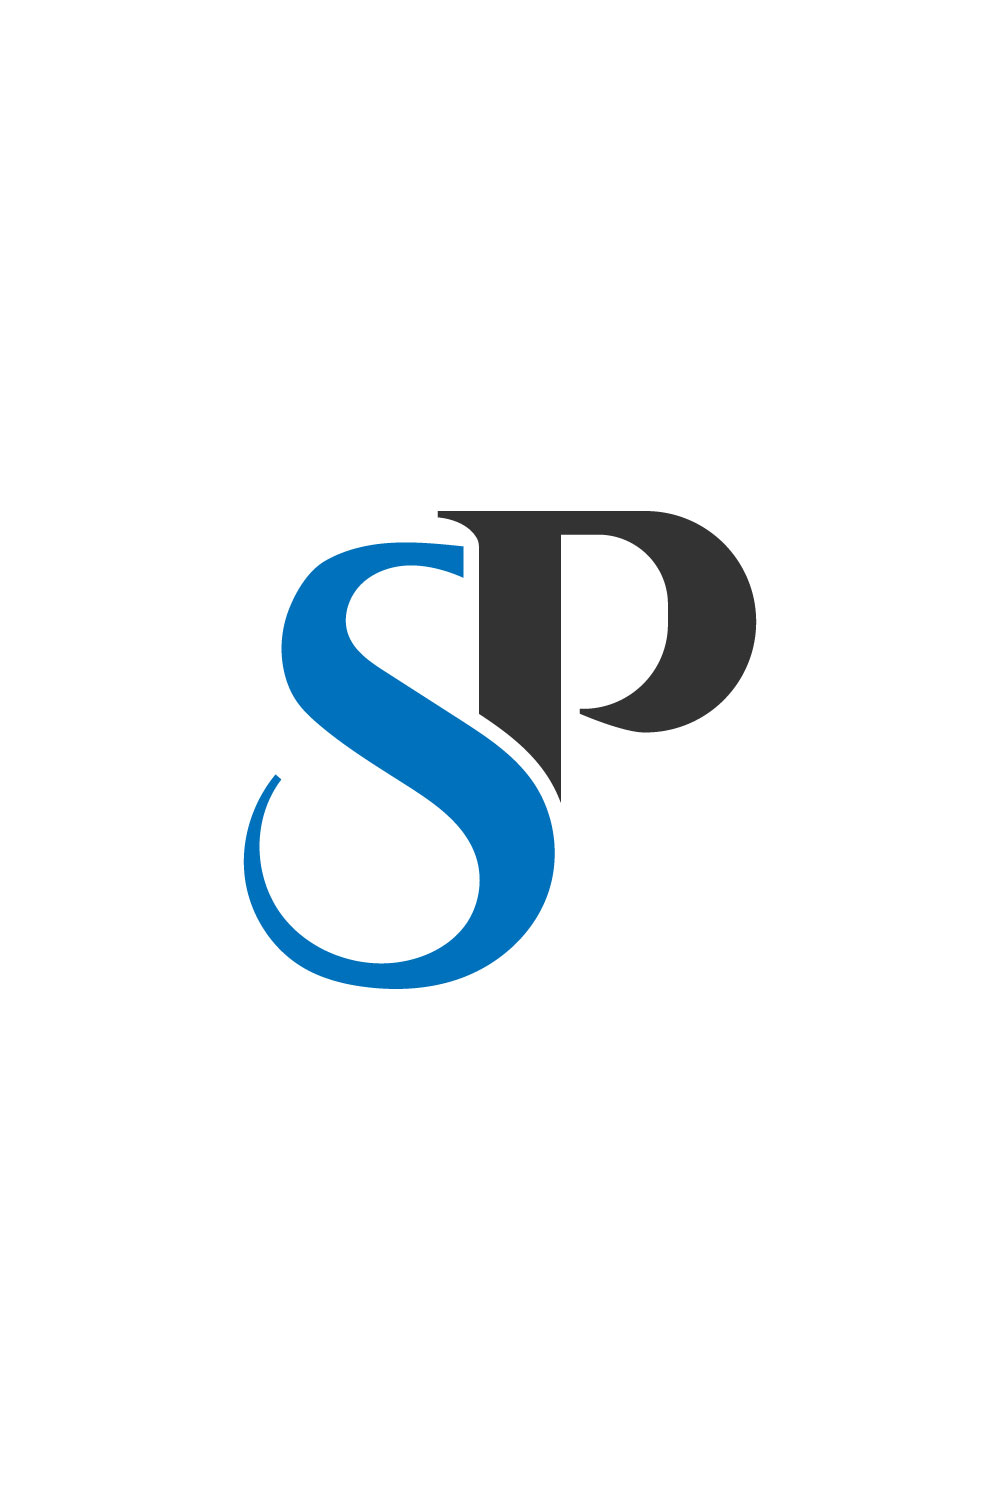 Stylish Logo SP Design Template Pinterest image.